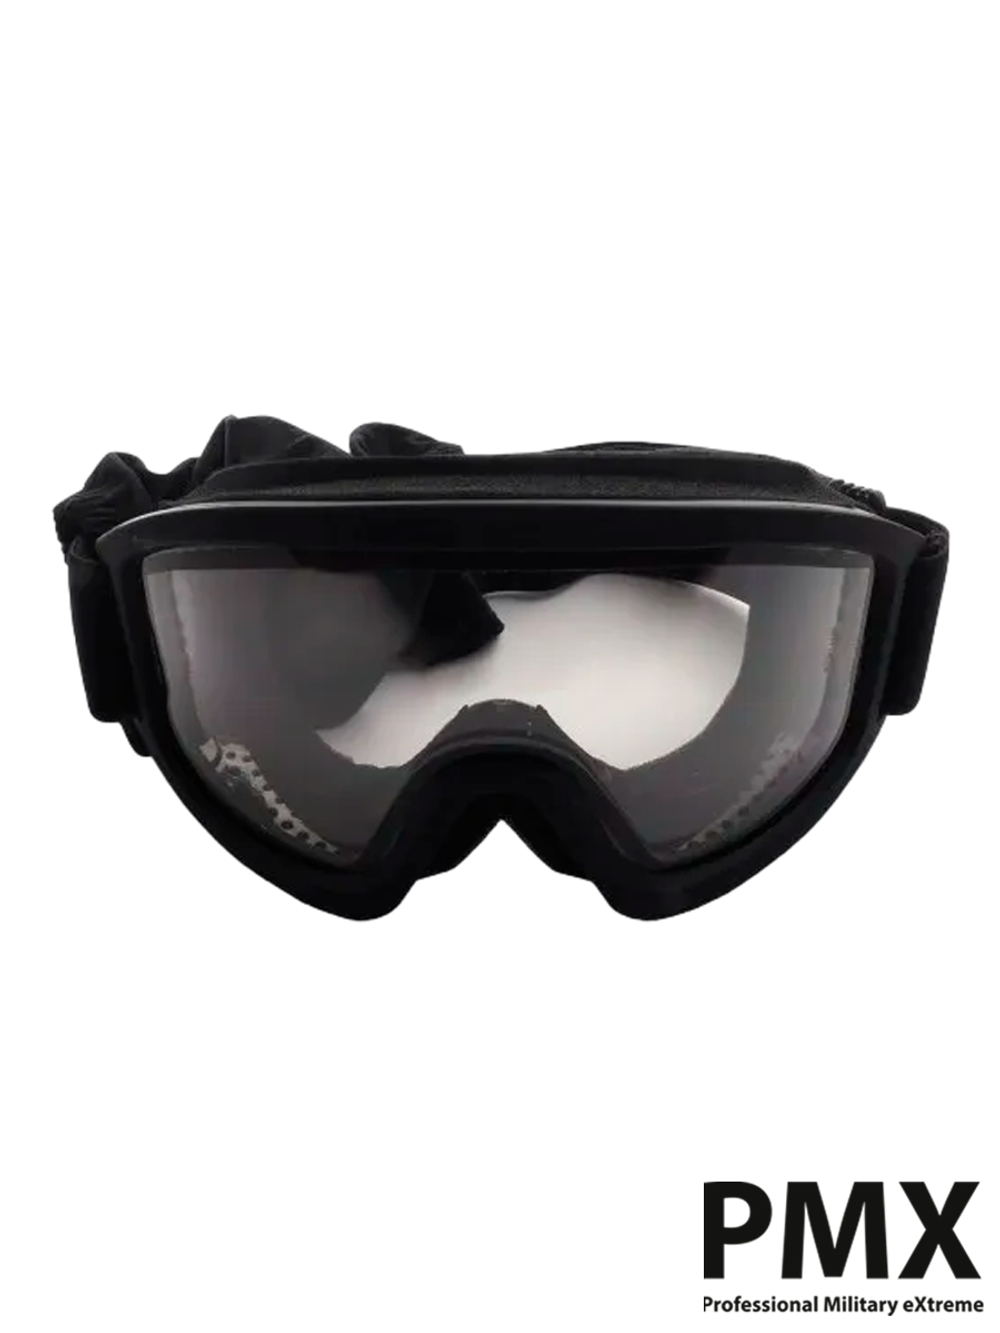 Очки-маска PMX Enforcer GB-900SDT Anti-Fog (2 сменные линзы)